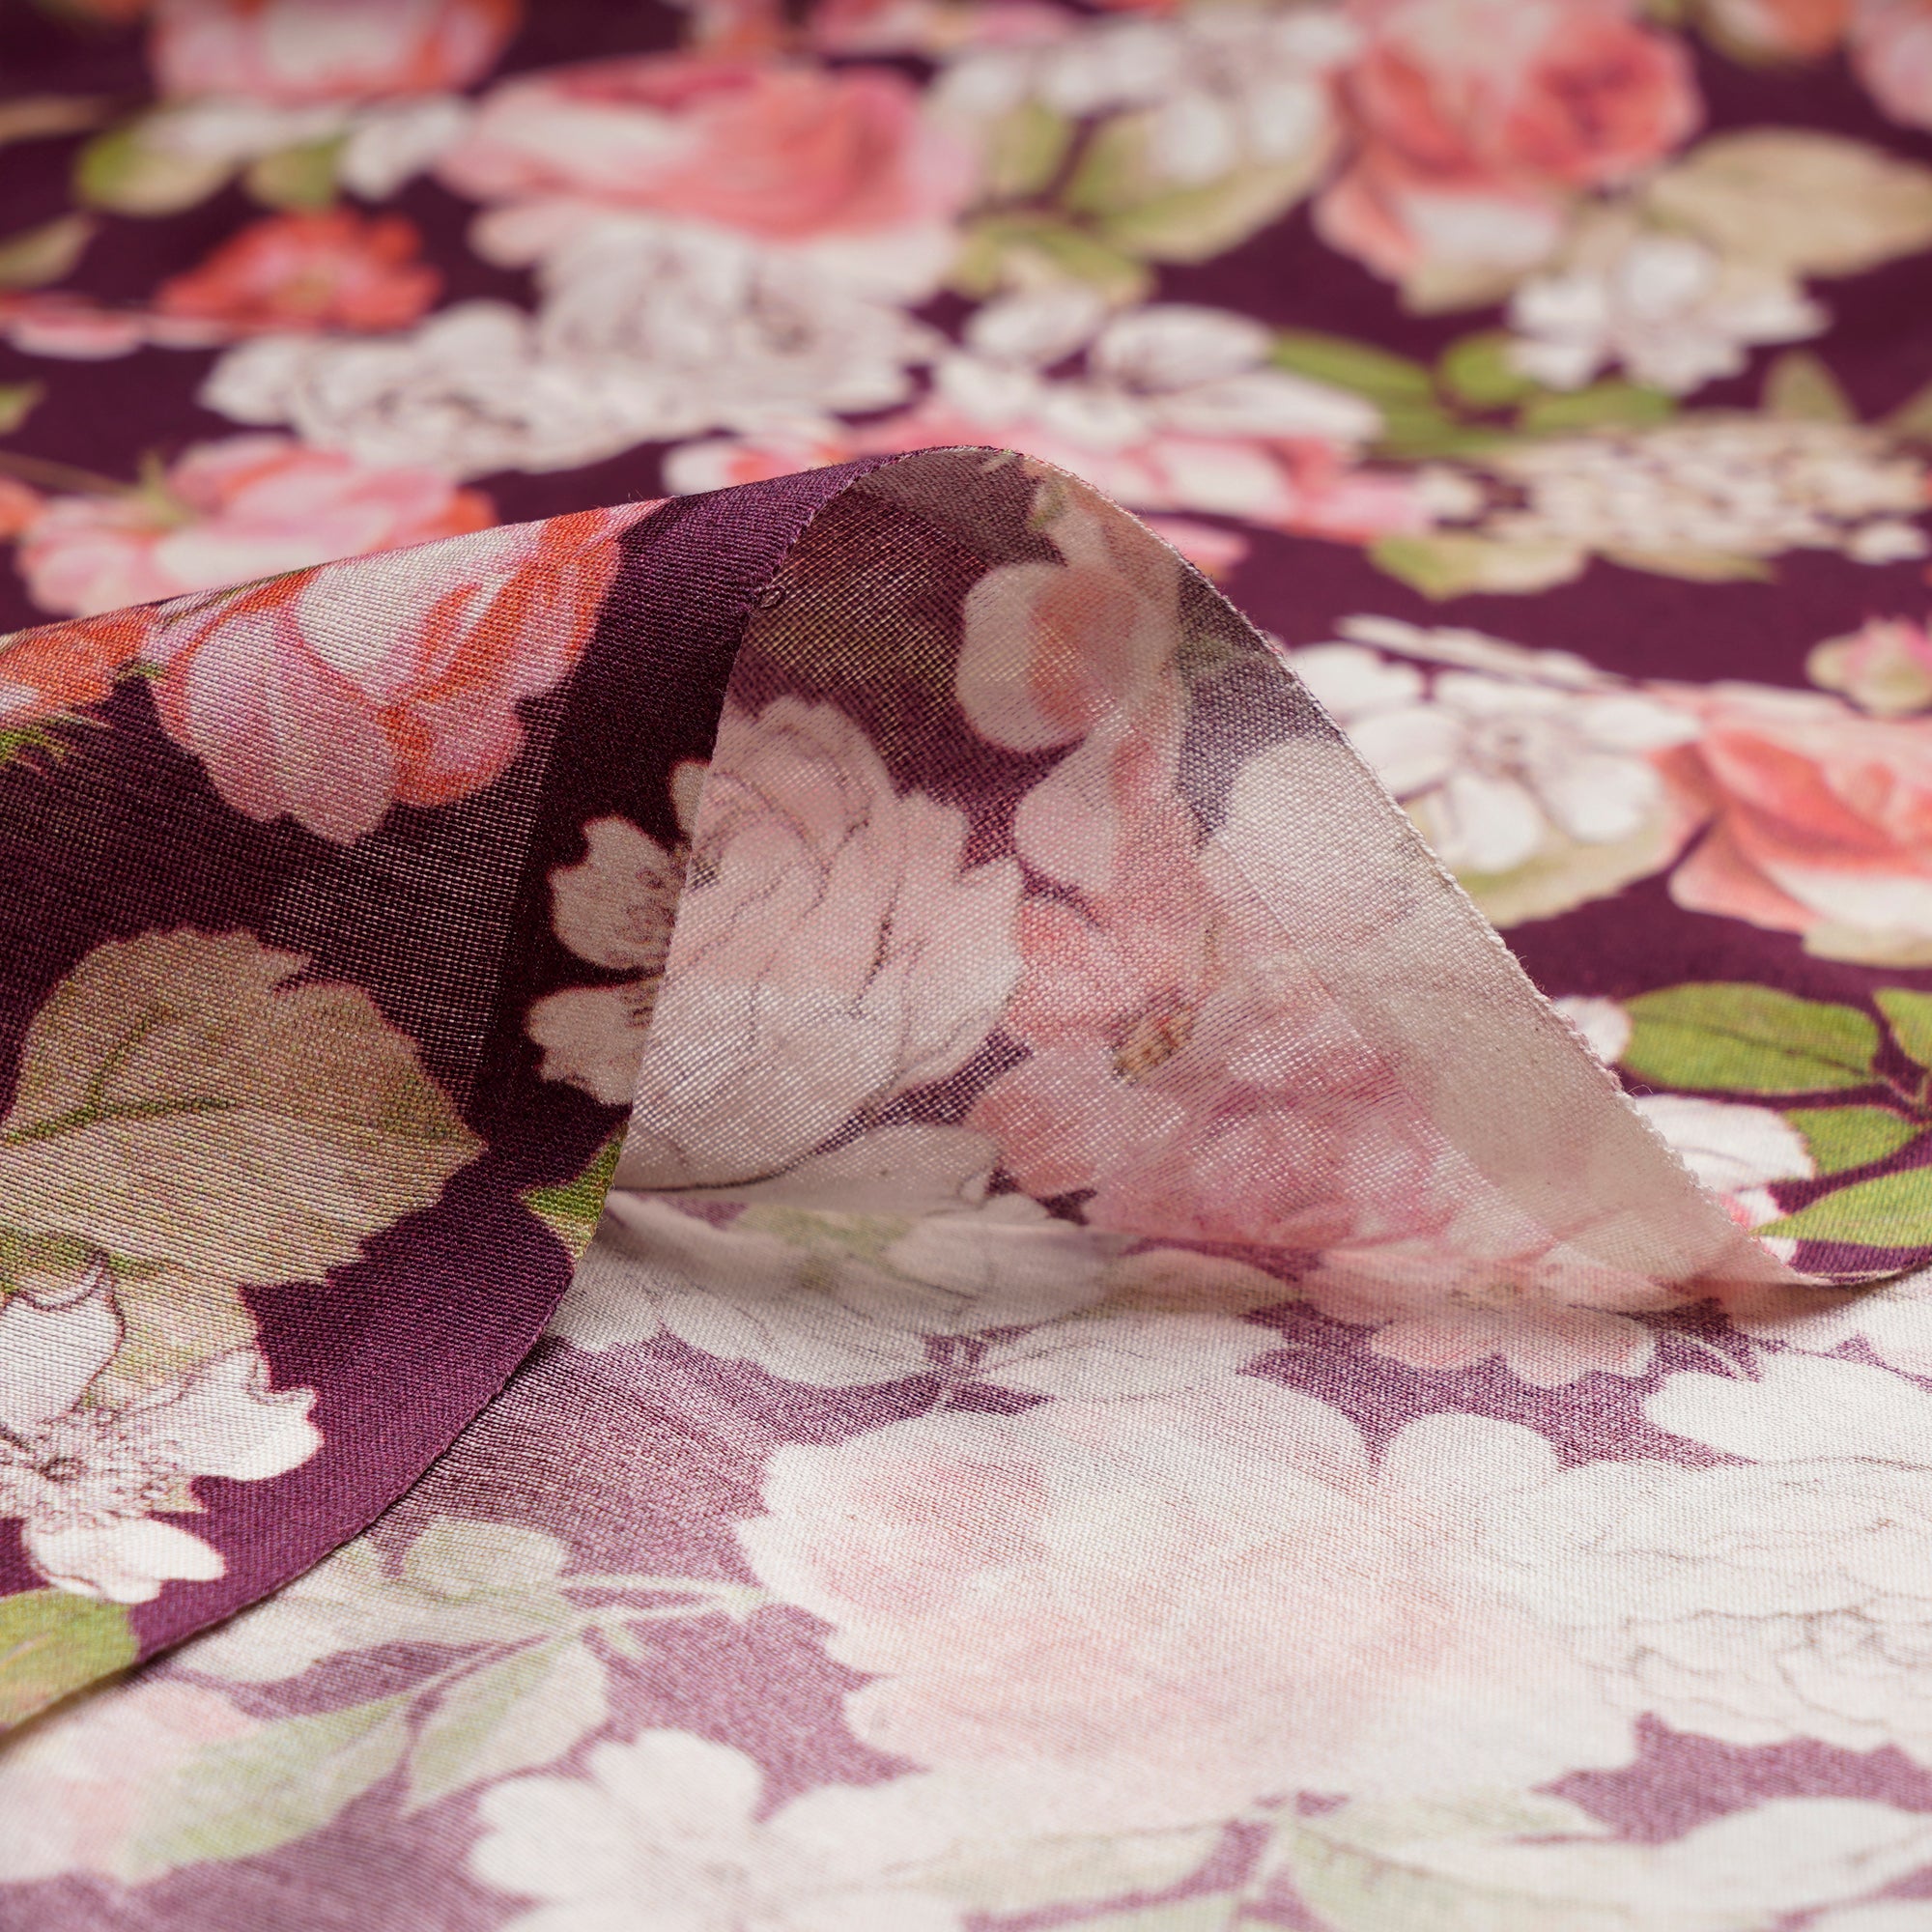 Crushed Berry Floral Pattern Digital Print Chanderi Fabric